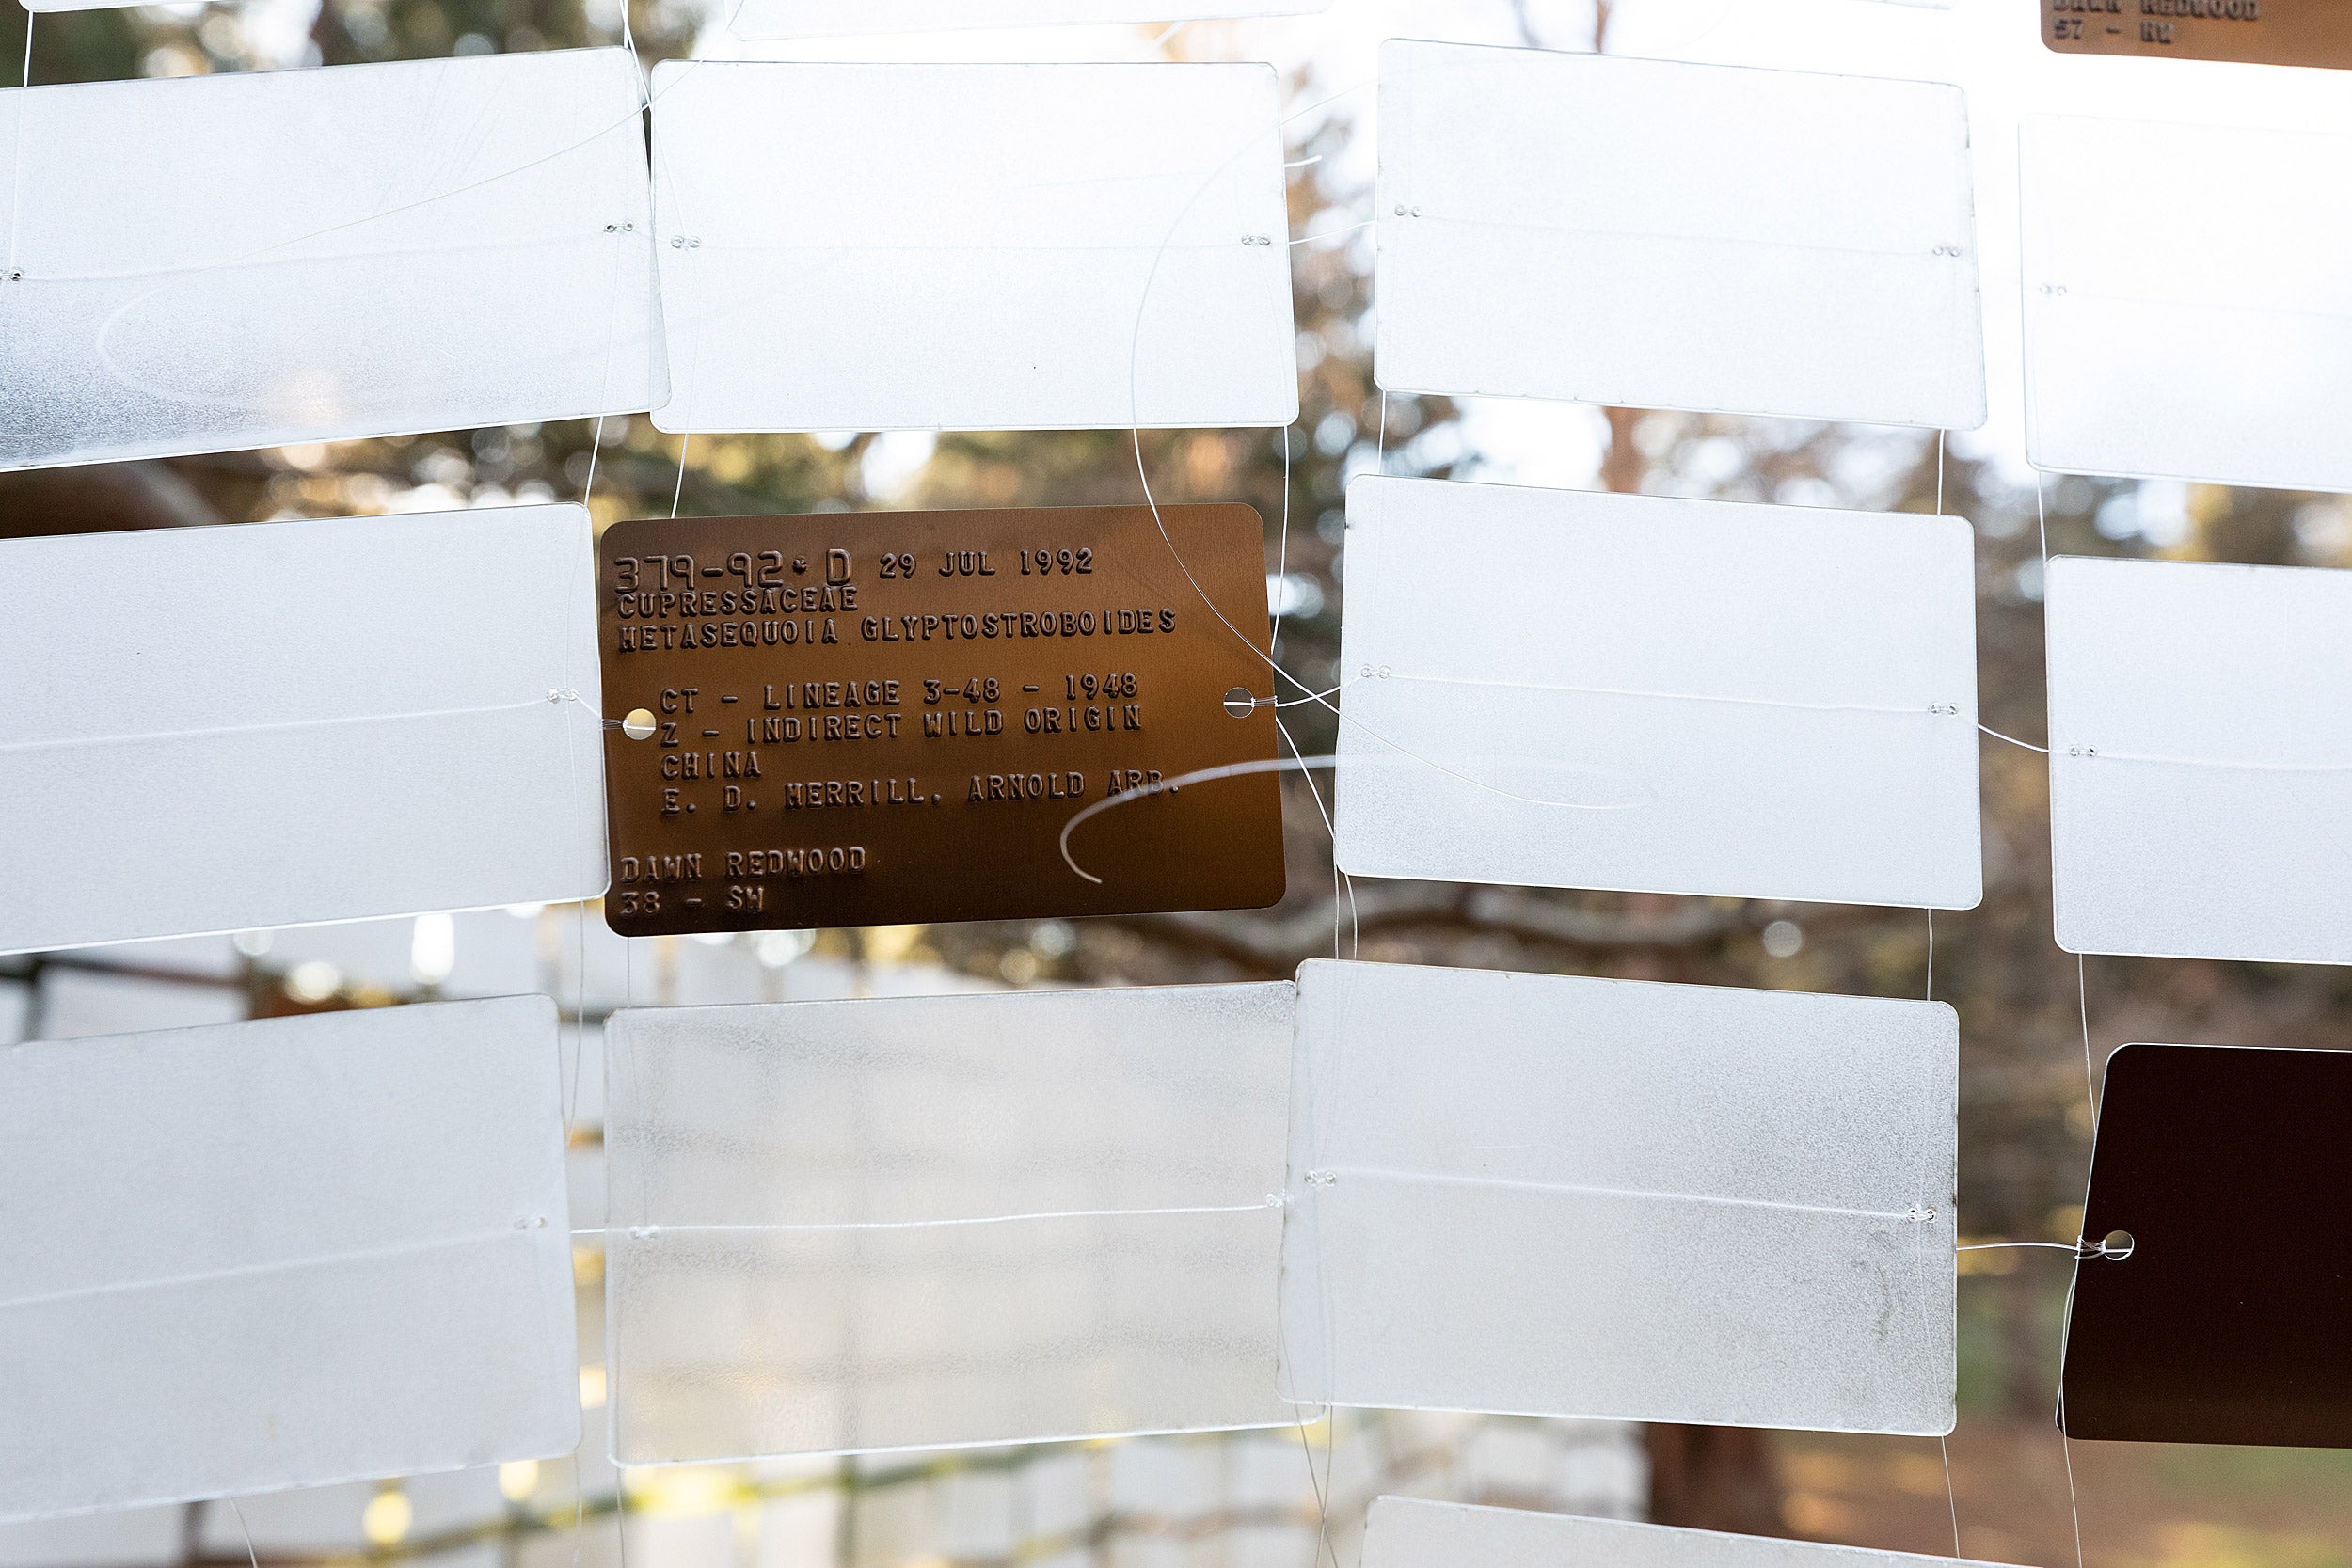 Installation at the Arboretum uses plant ID tags.